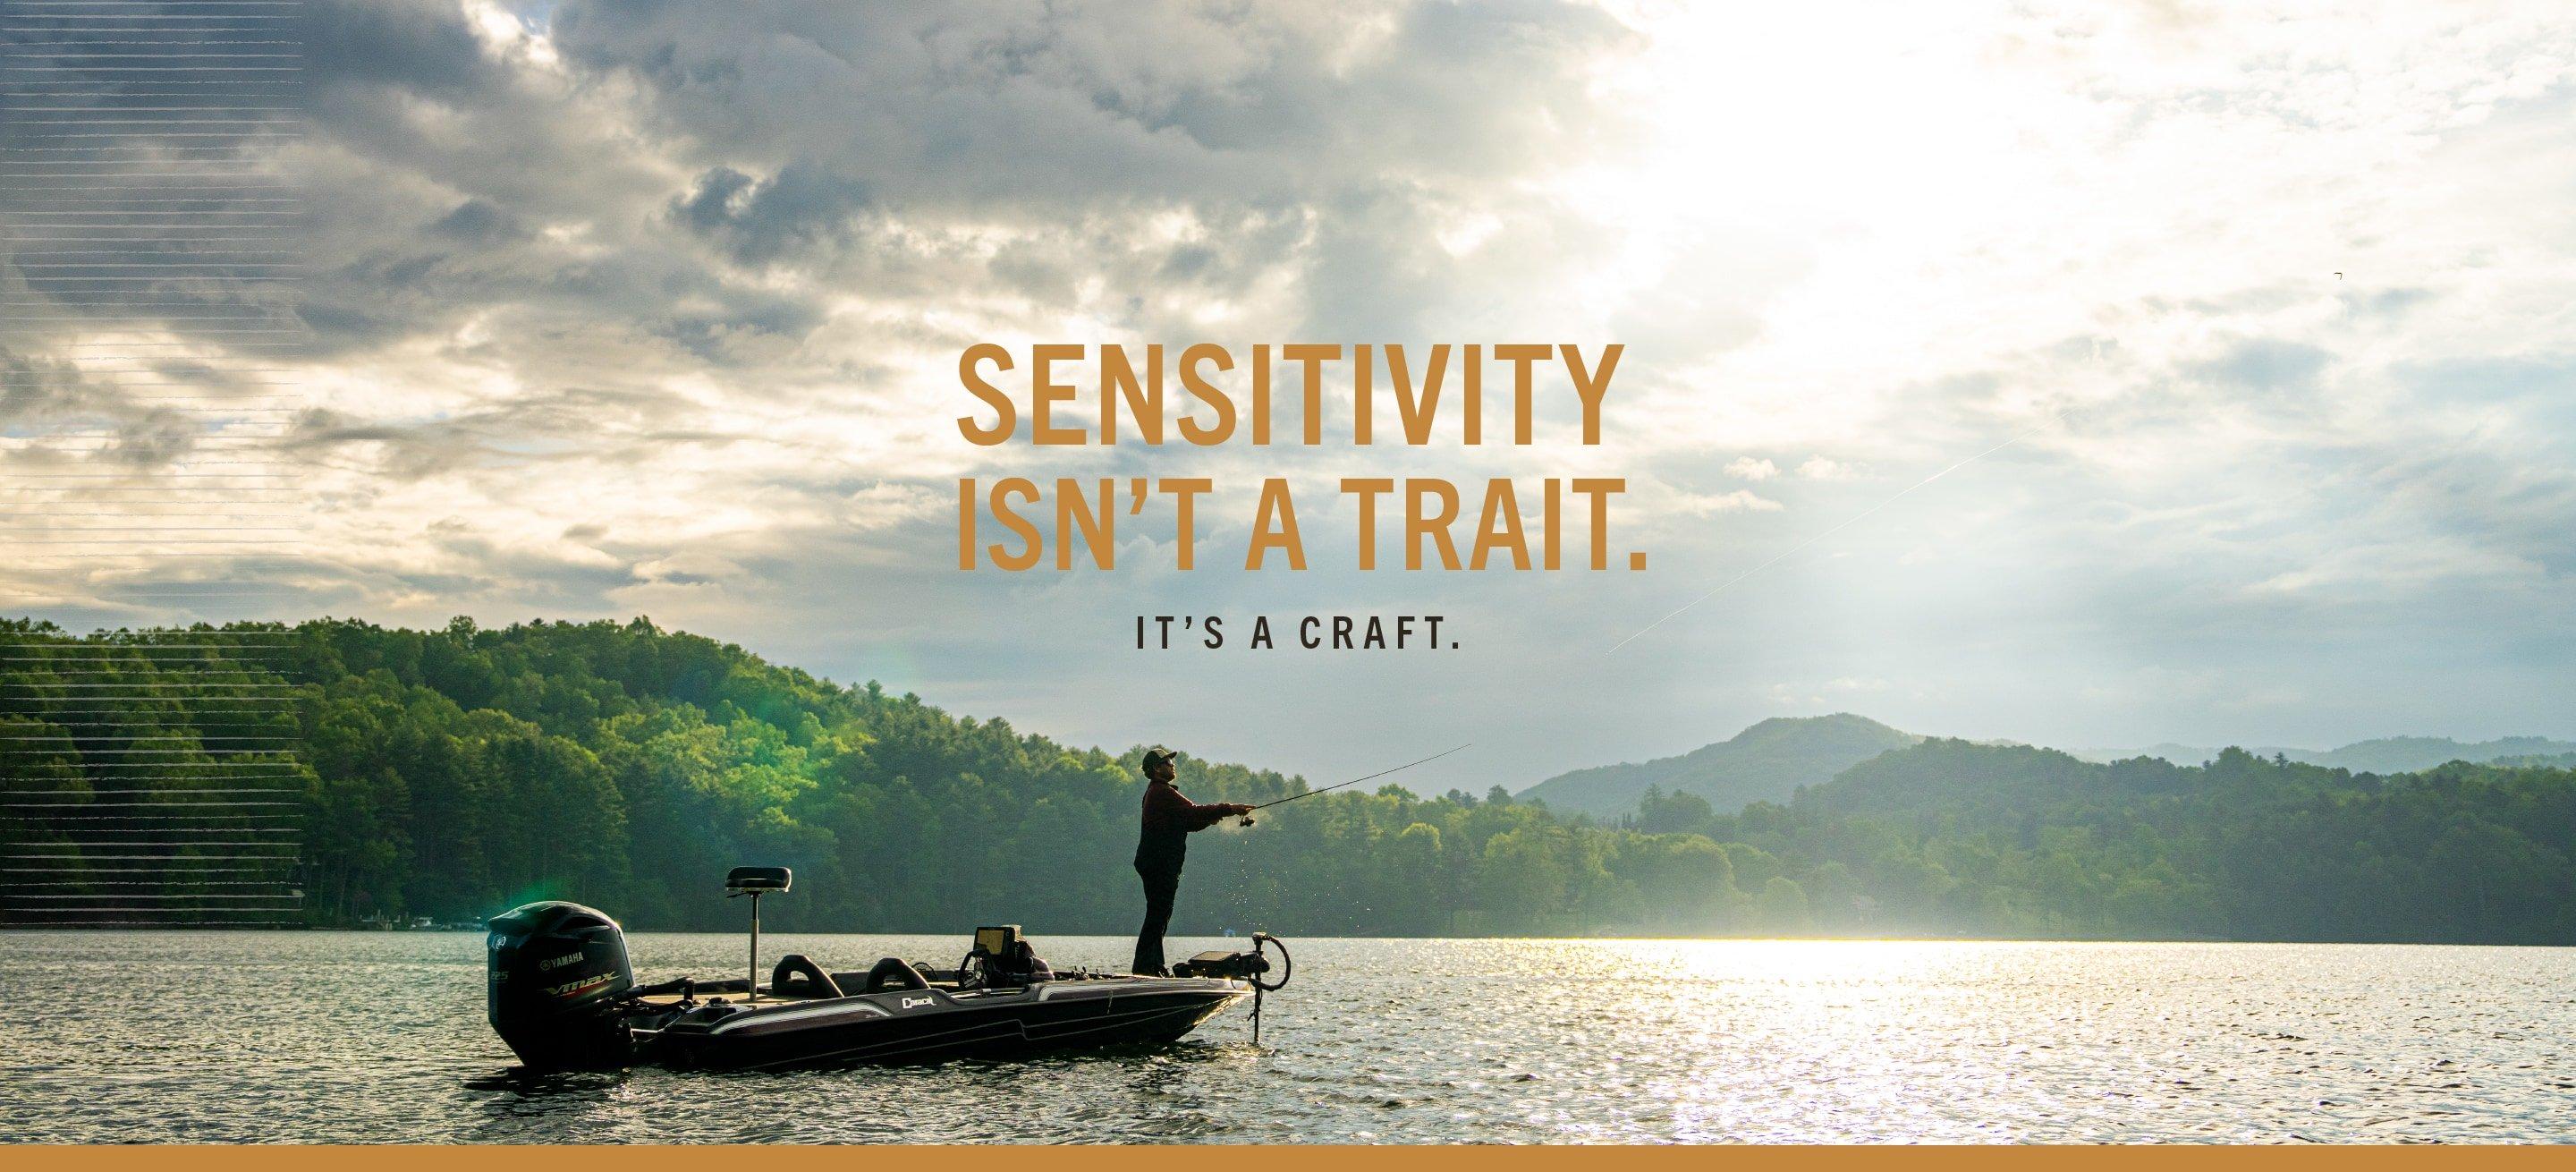 Sensitivity isn't a trait, it's a craft.